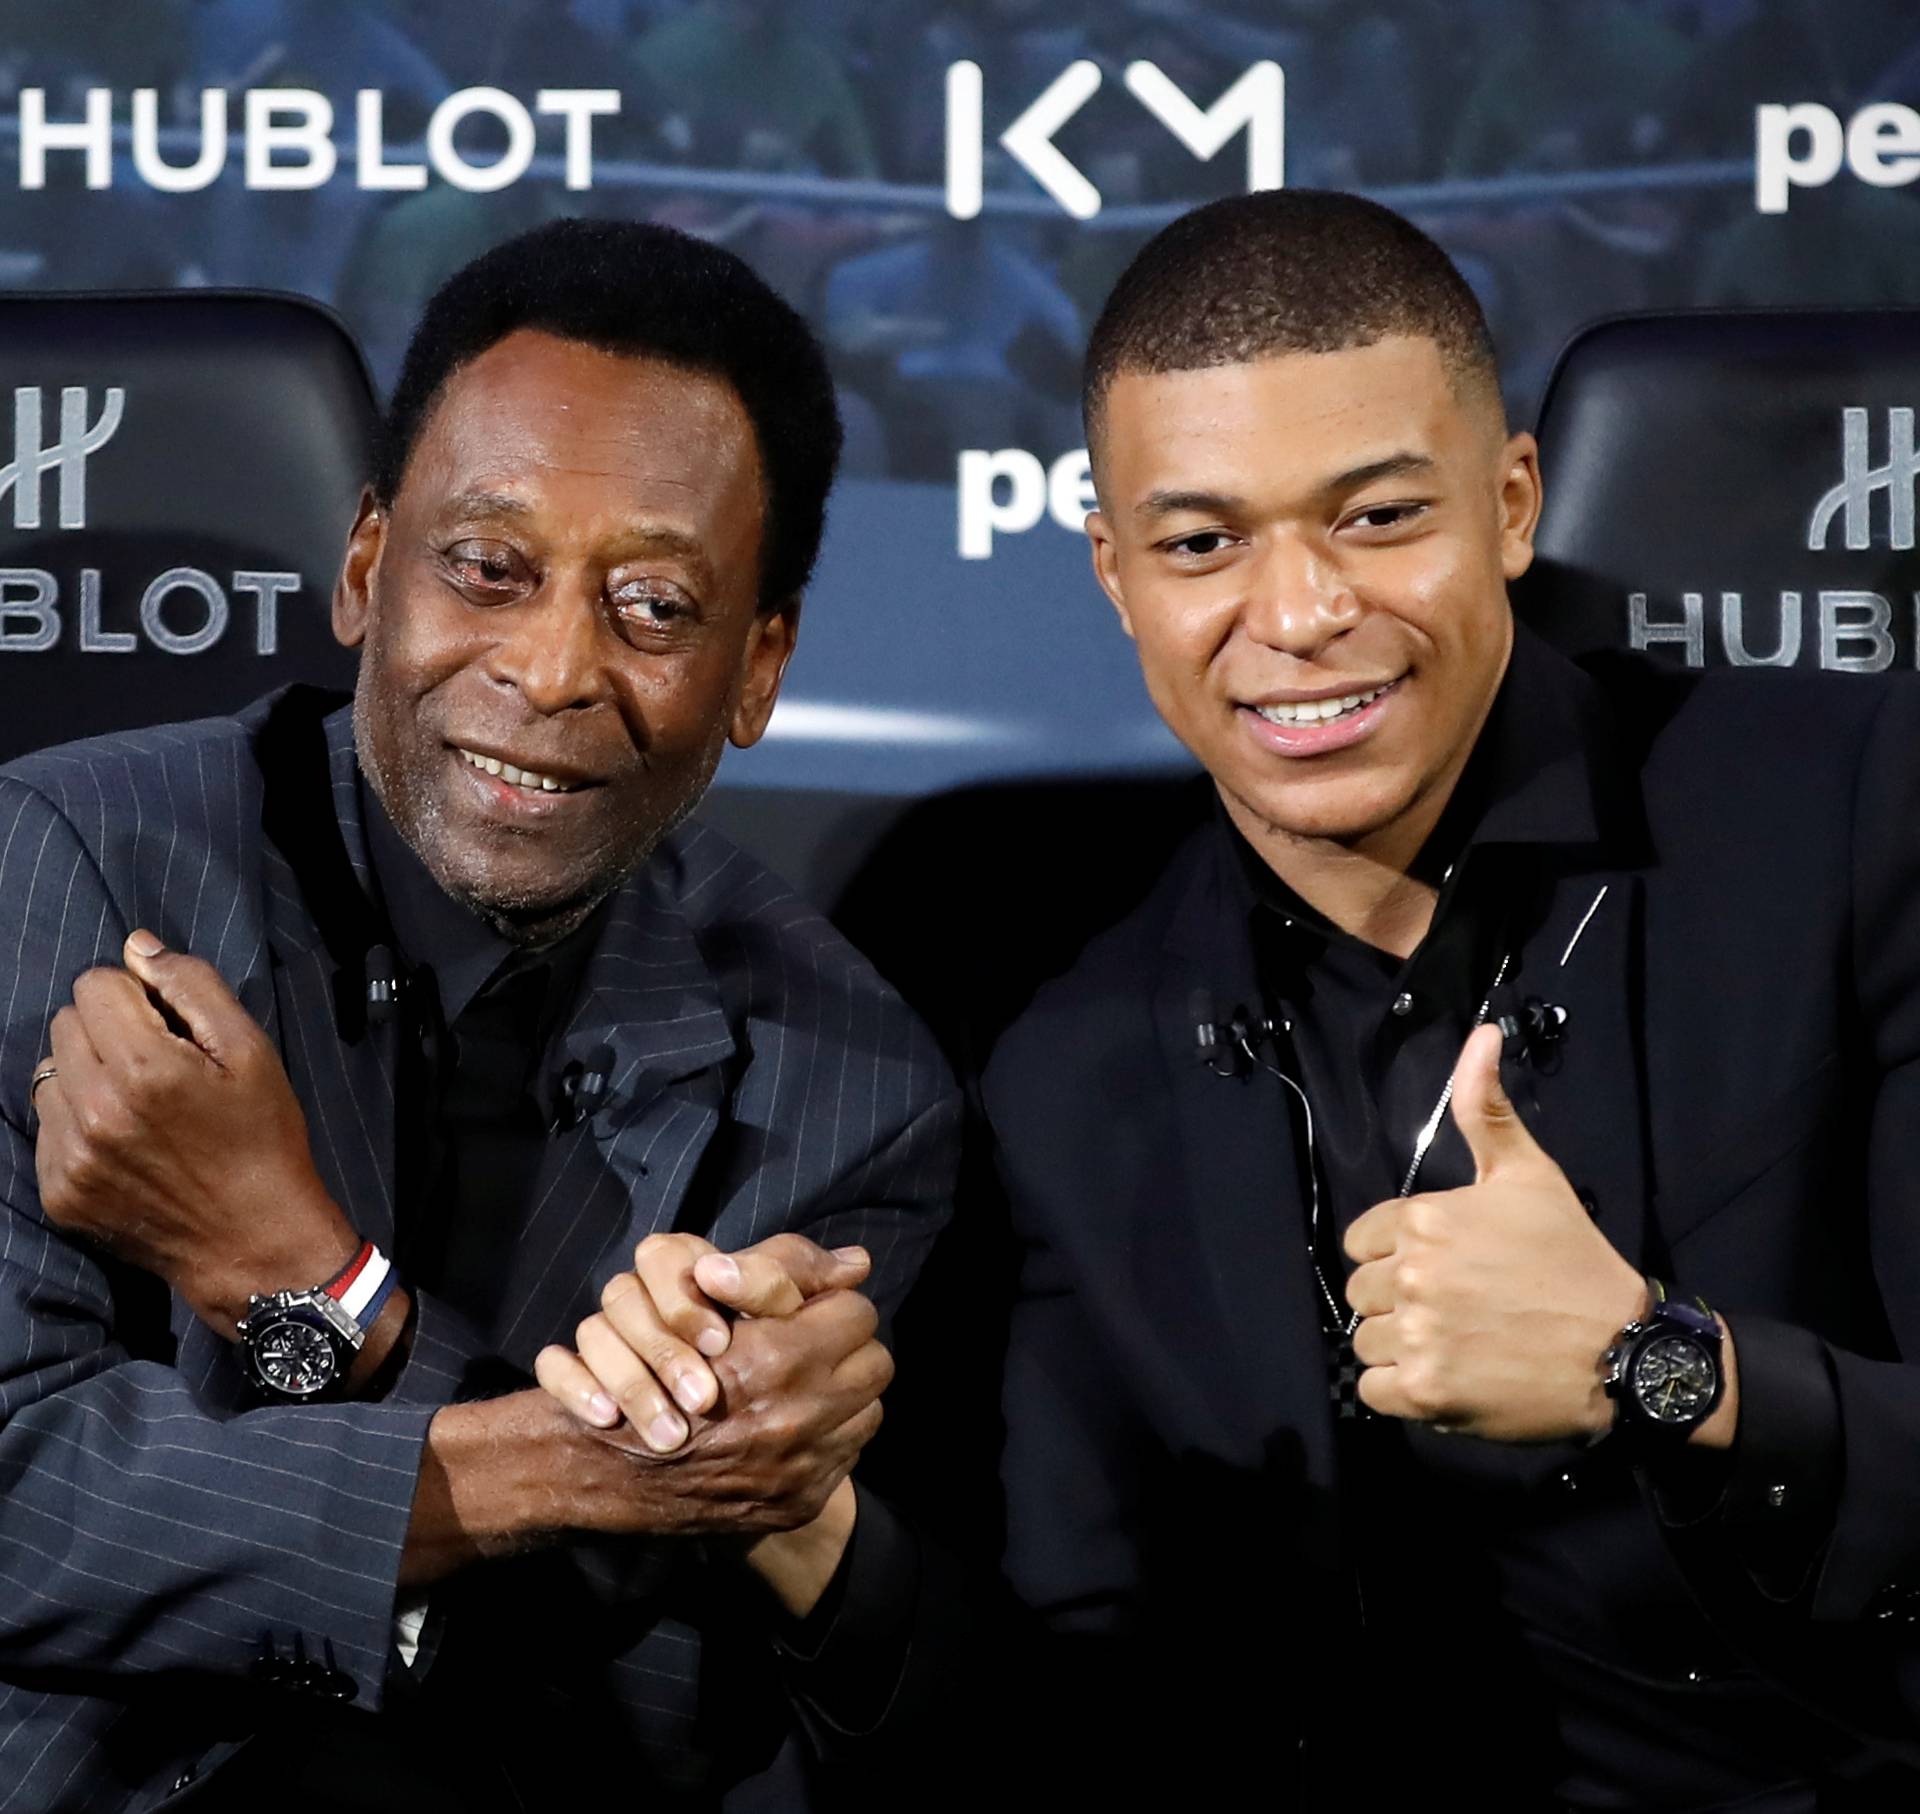 French soccer player Kylian Mbappe and Brazilian soccer legend Pele meet in Paris